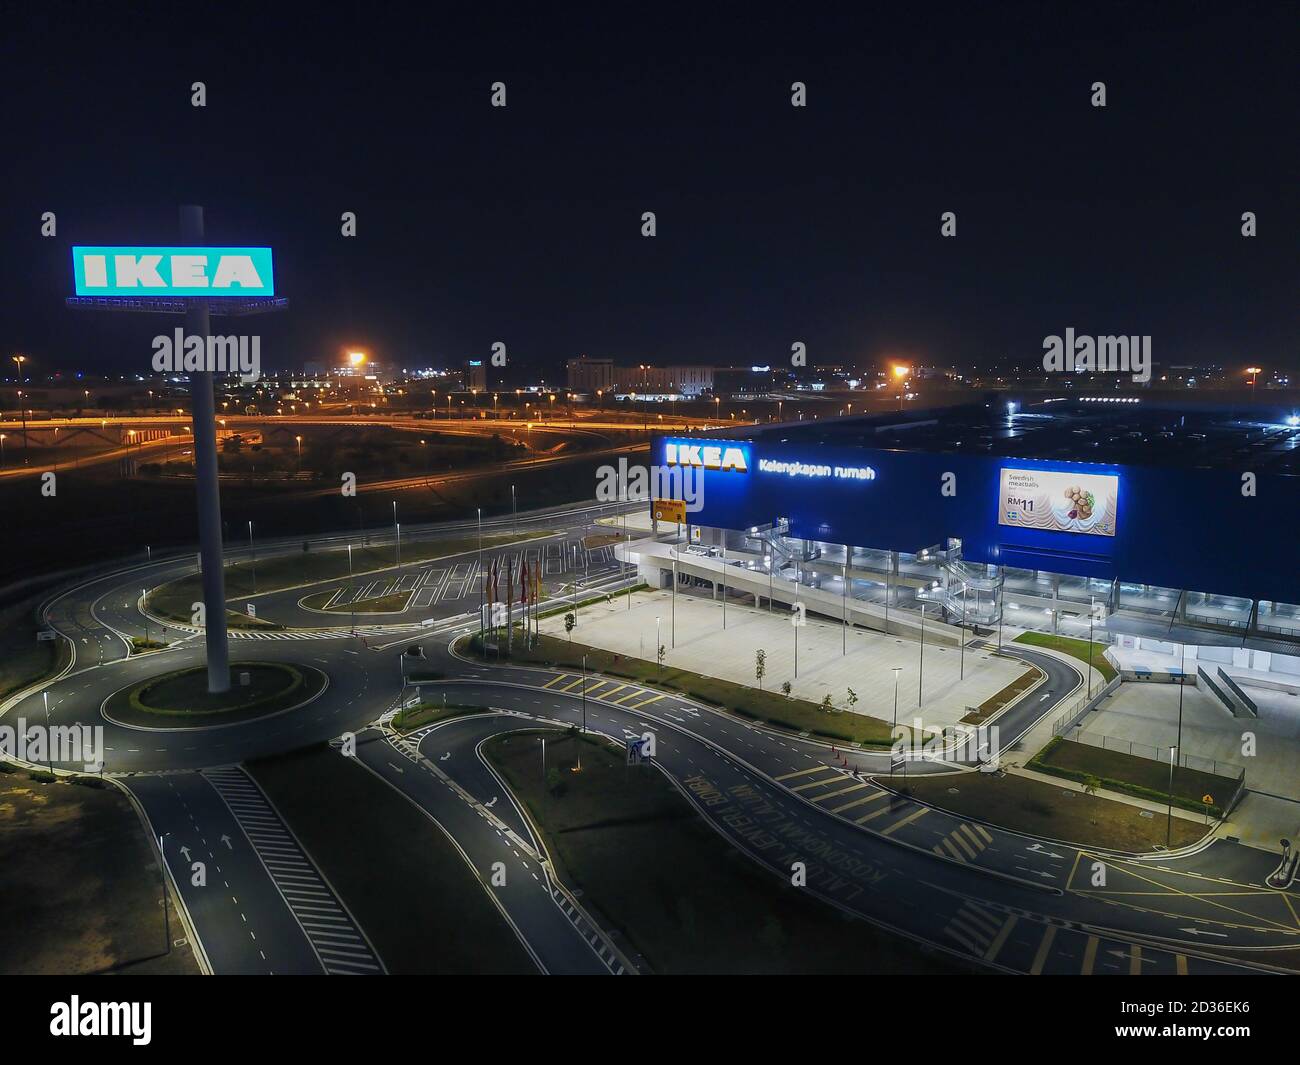 Batu Kawan, Penang/Malaysia - Mar 20 2020: IKEA store at night Stock Photo  - Alamy